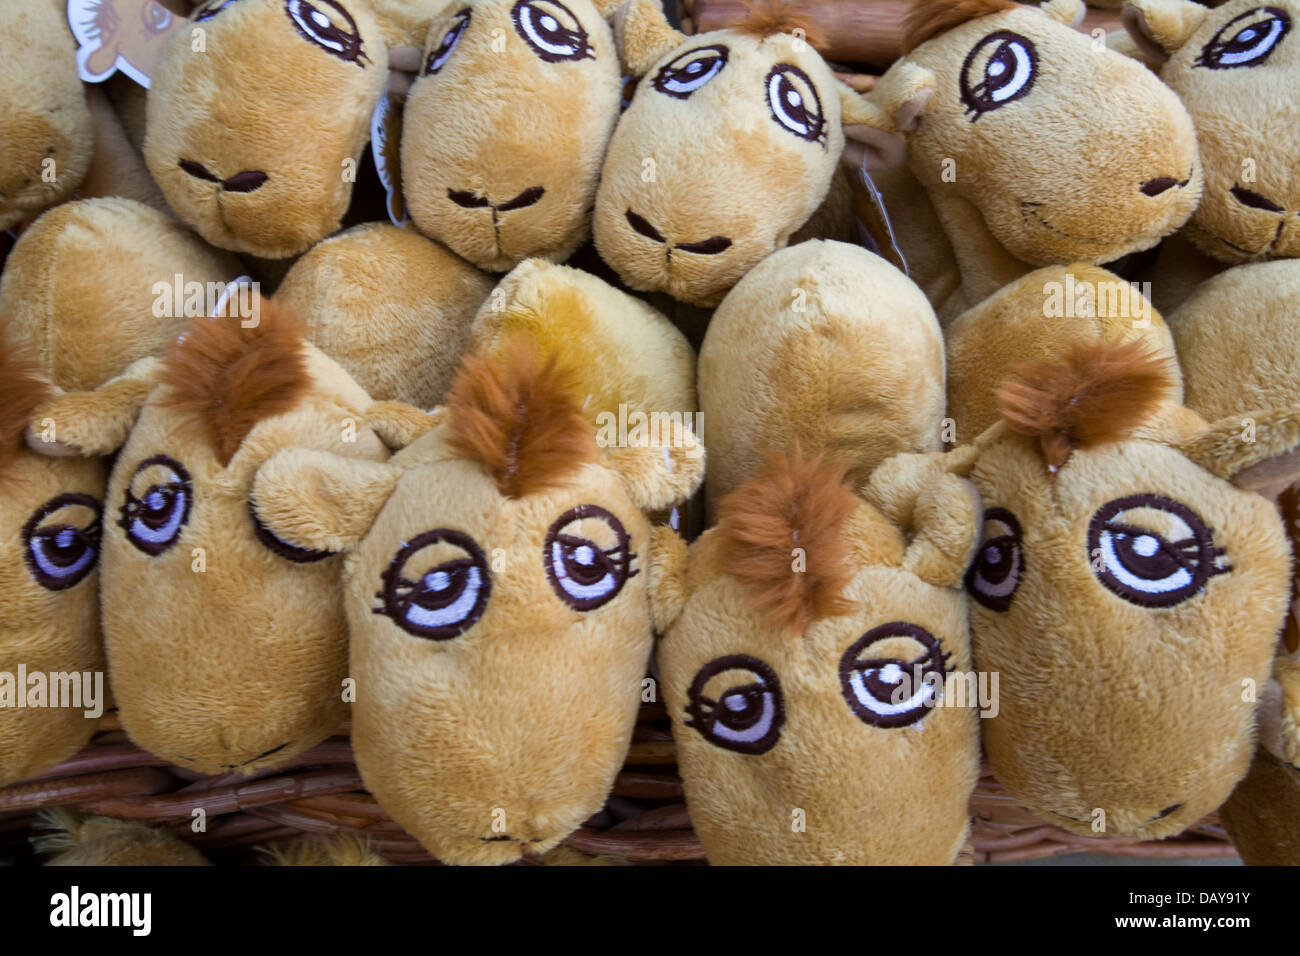 Stuffed baby camels beg for buyers at Souq Madinat Jumeirah, Dubai, United Arab Emirates Stock Photo